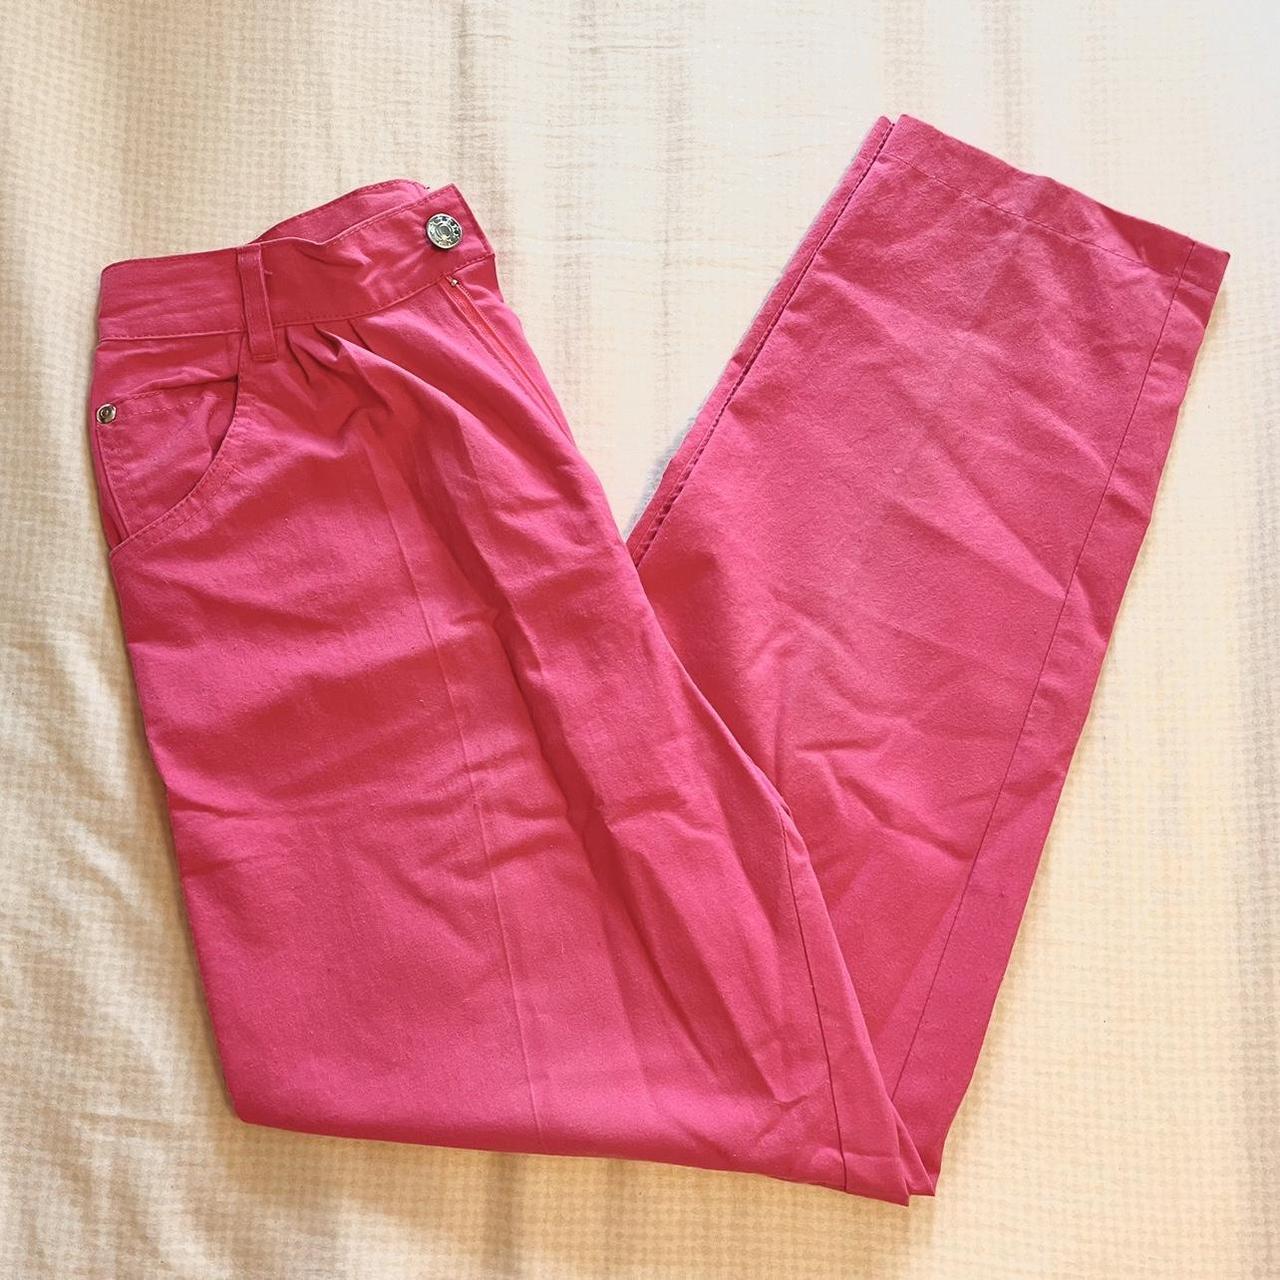 Thomas Pink Trousers Size 32 Waist Mens Brand New | eBay